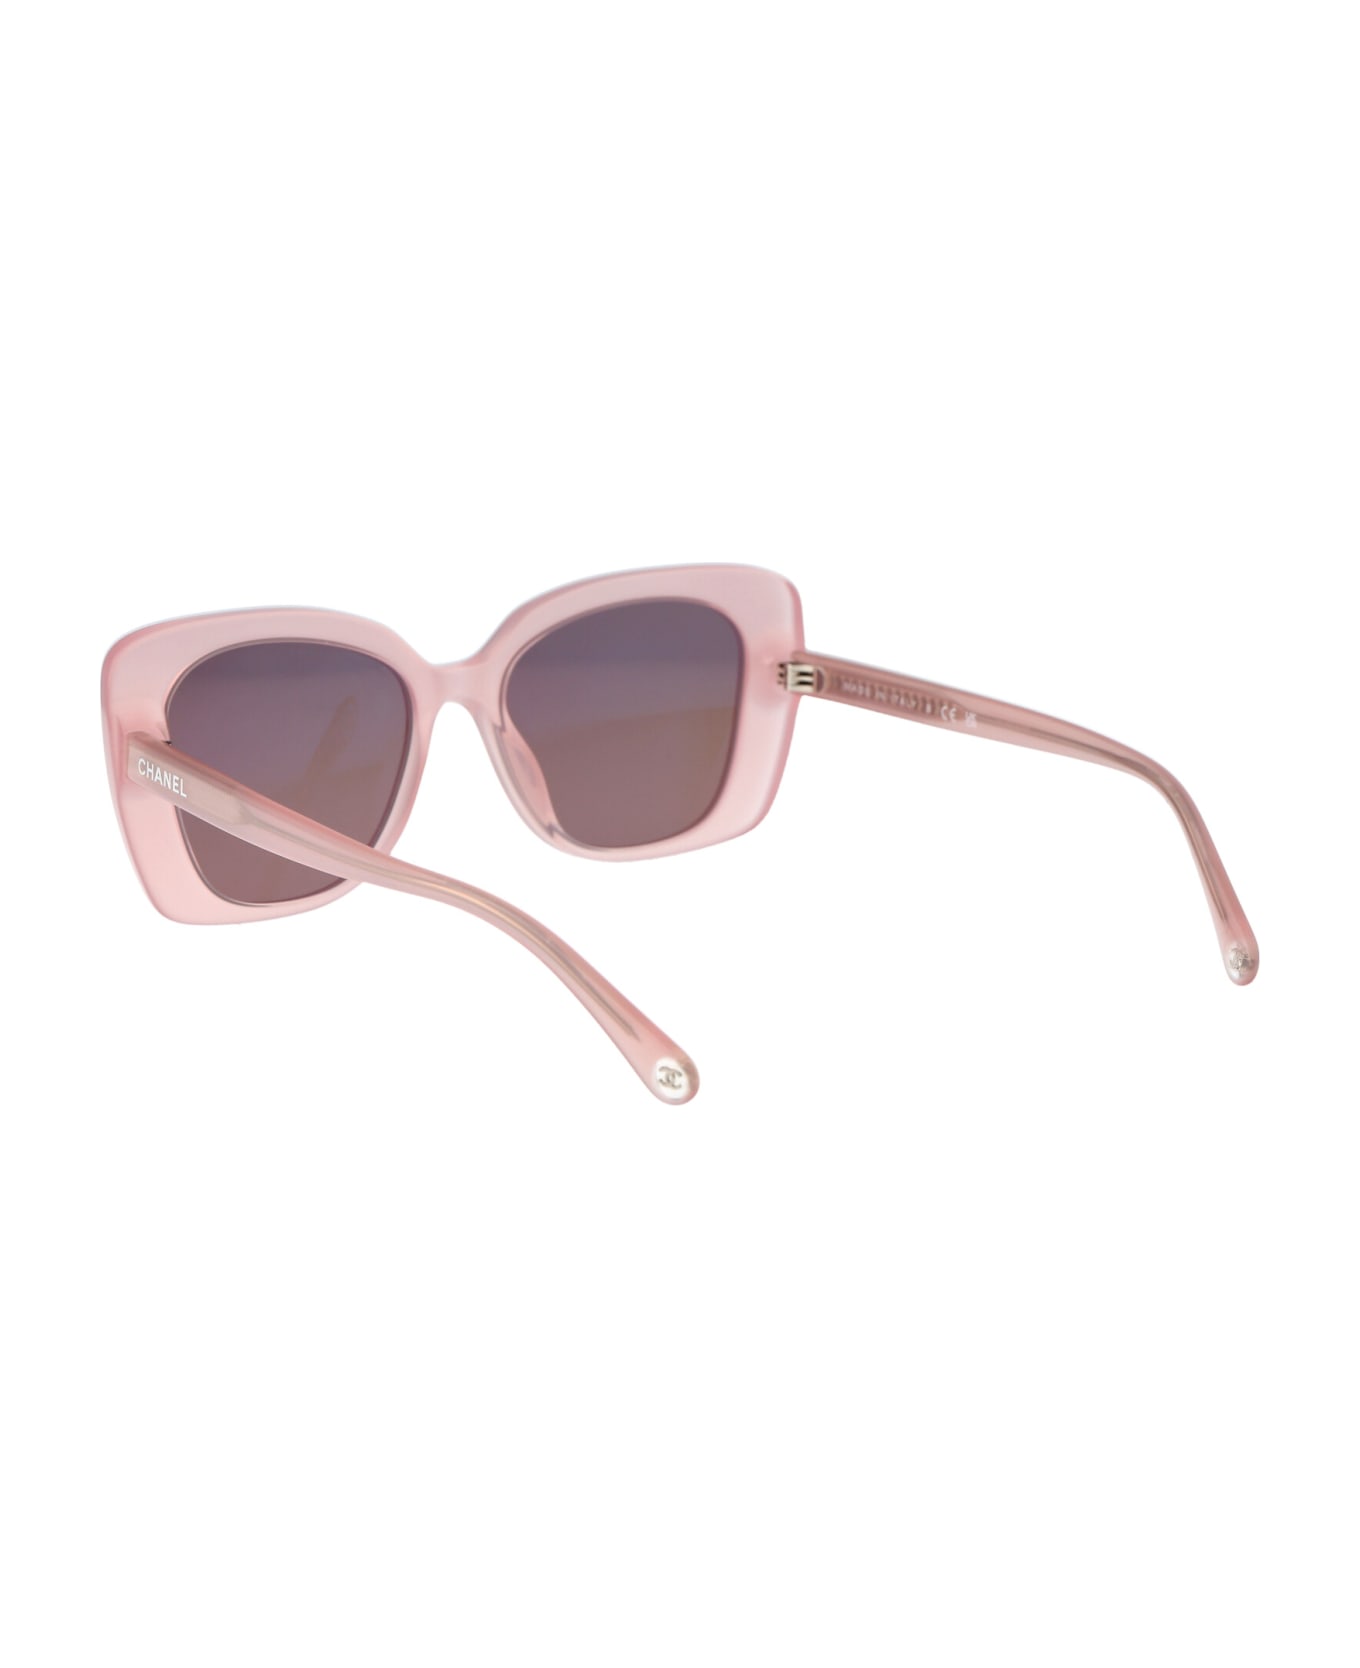 Chanel 0ch5504 Sunglasses - 17334R PINK